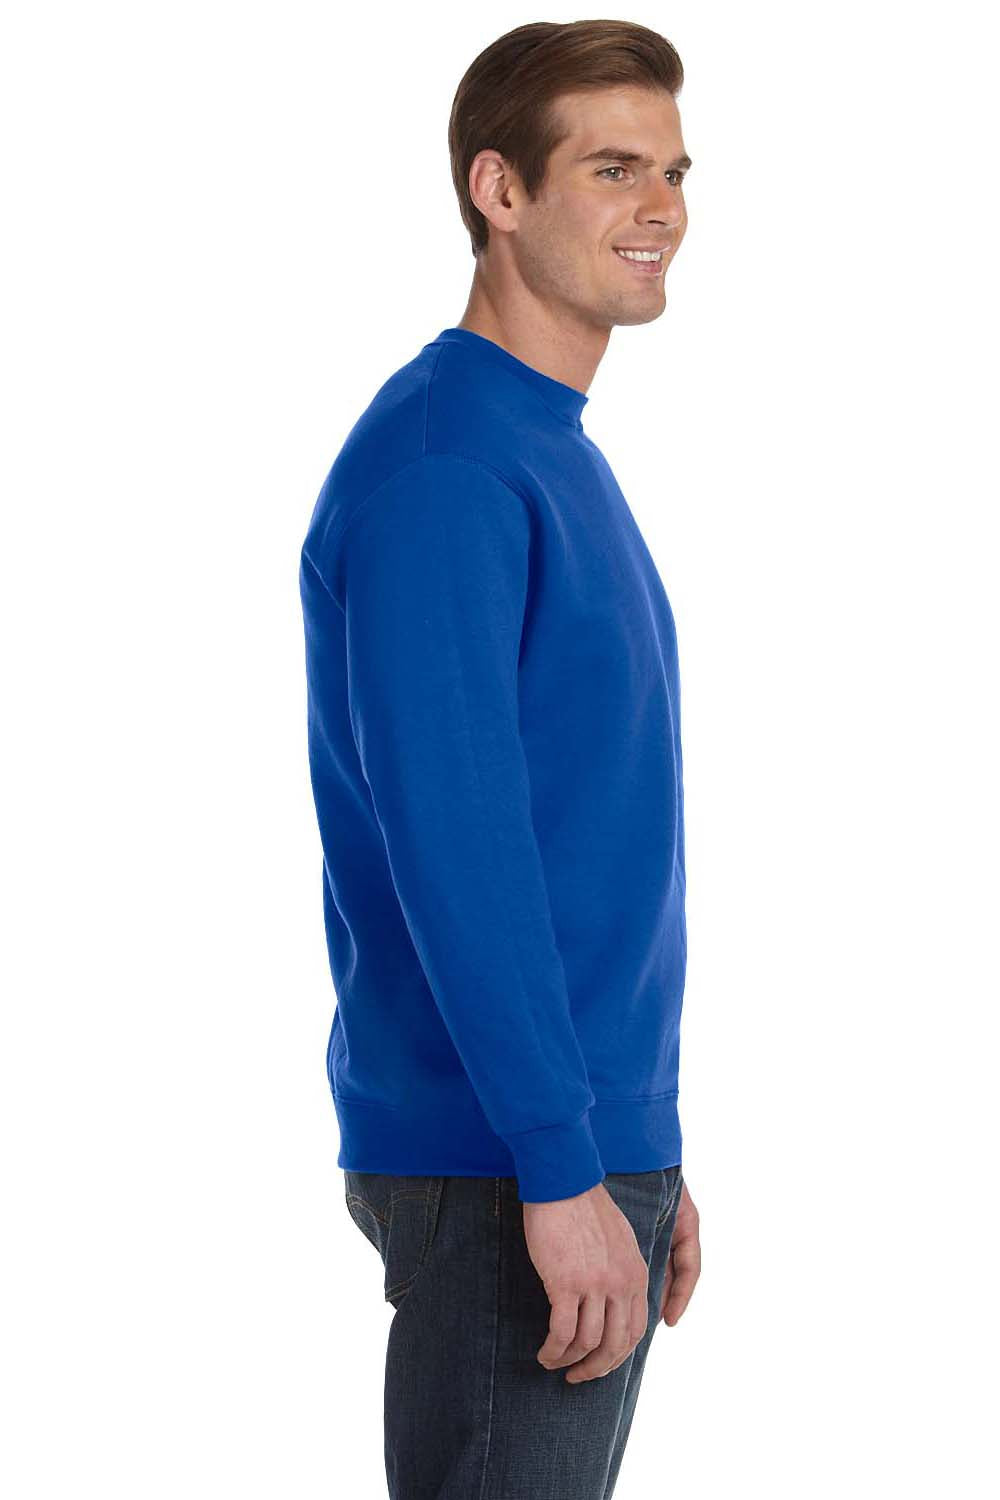 Gildan G120 Mens DryBlend Moisture Wicking Fleece Crewneck Sweatshirt Royal Blue Side